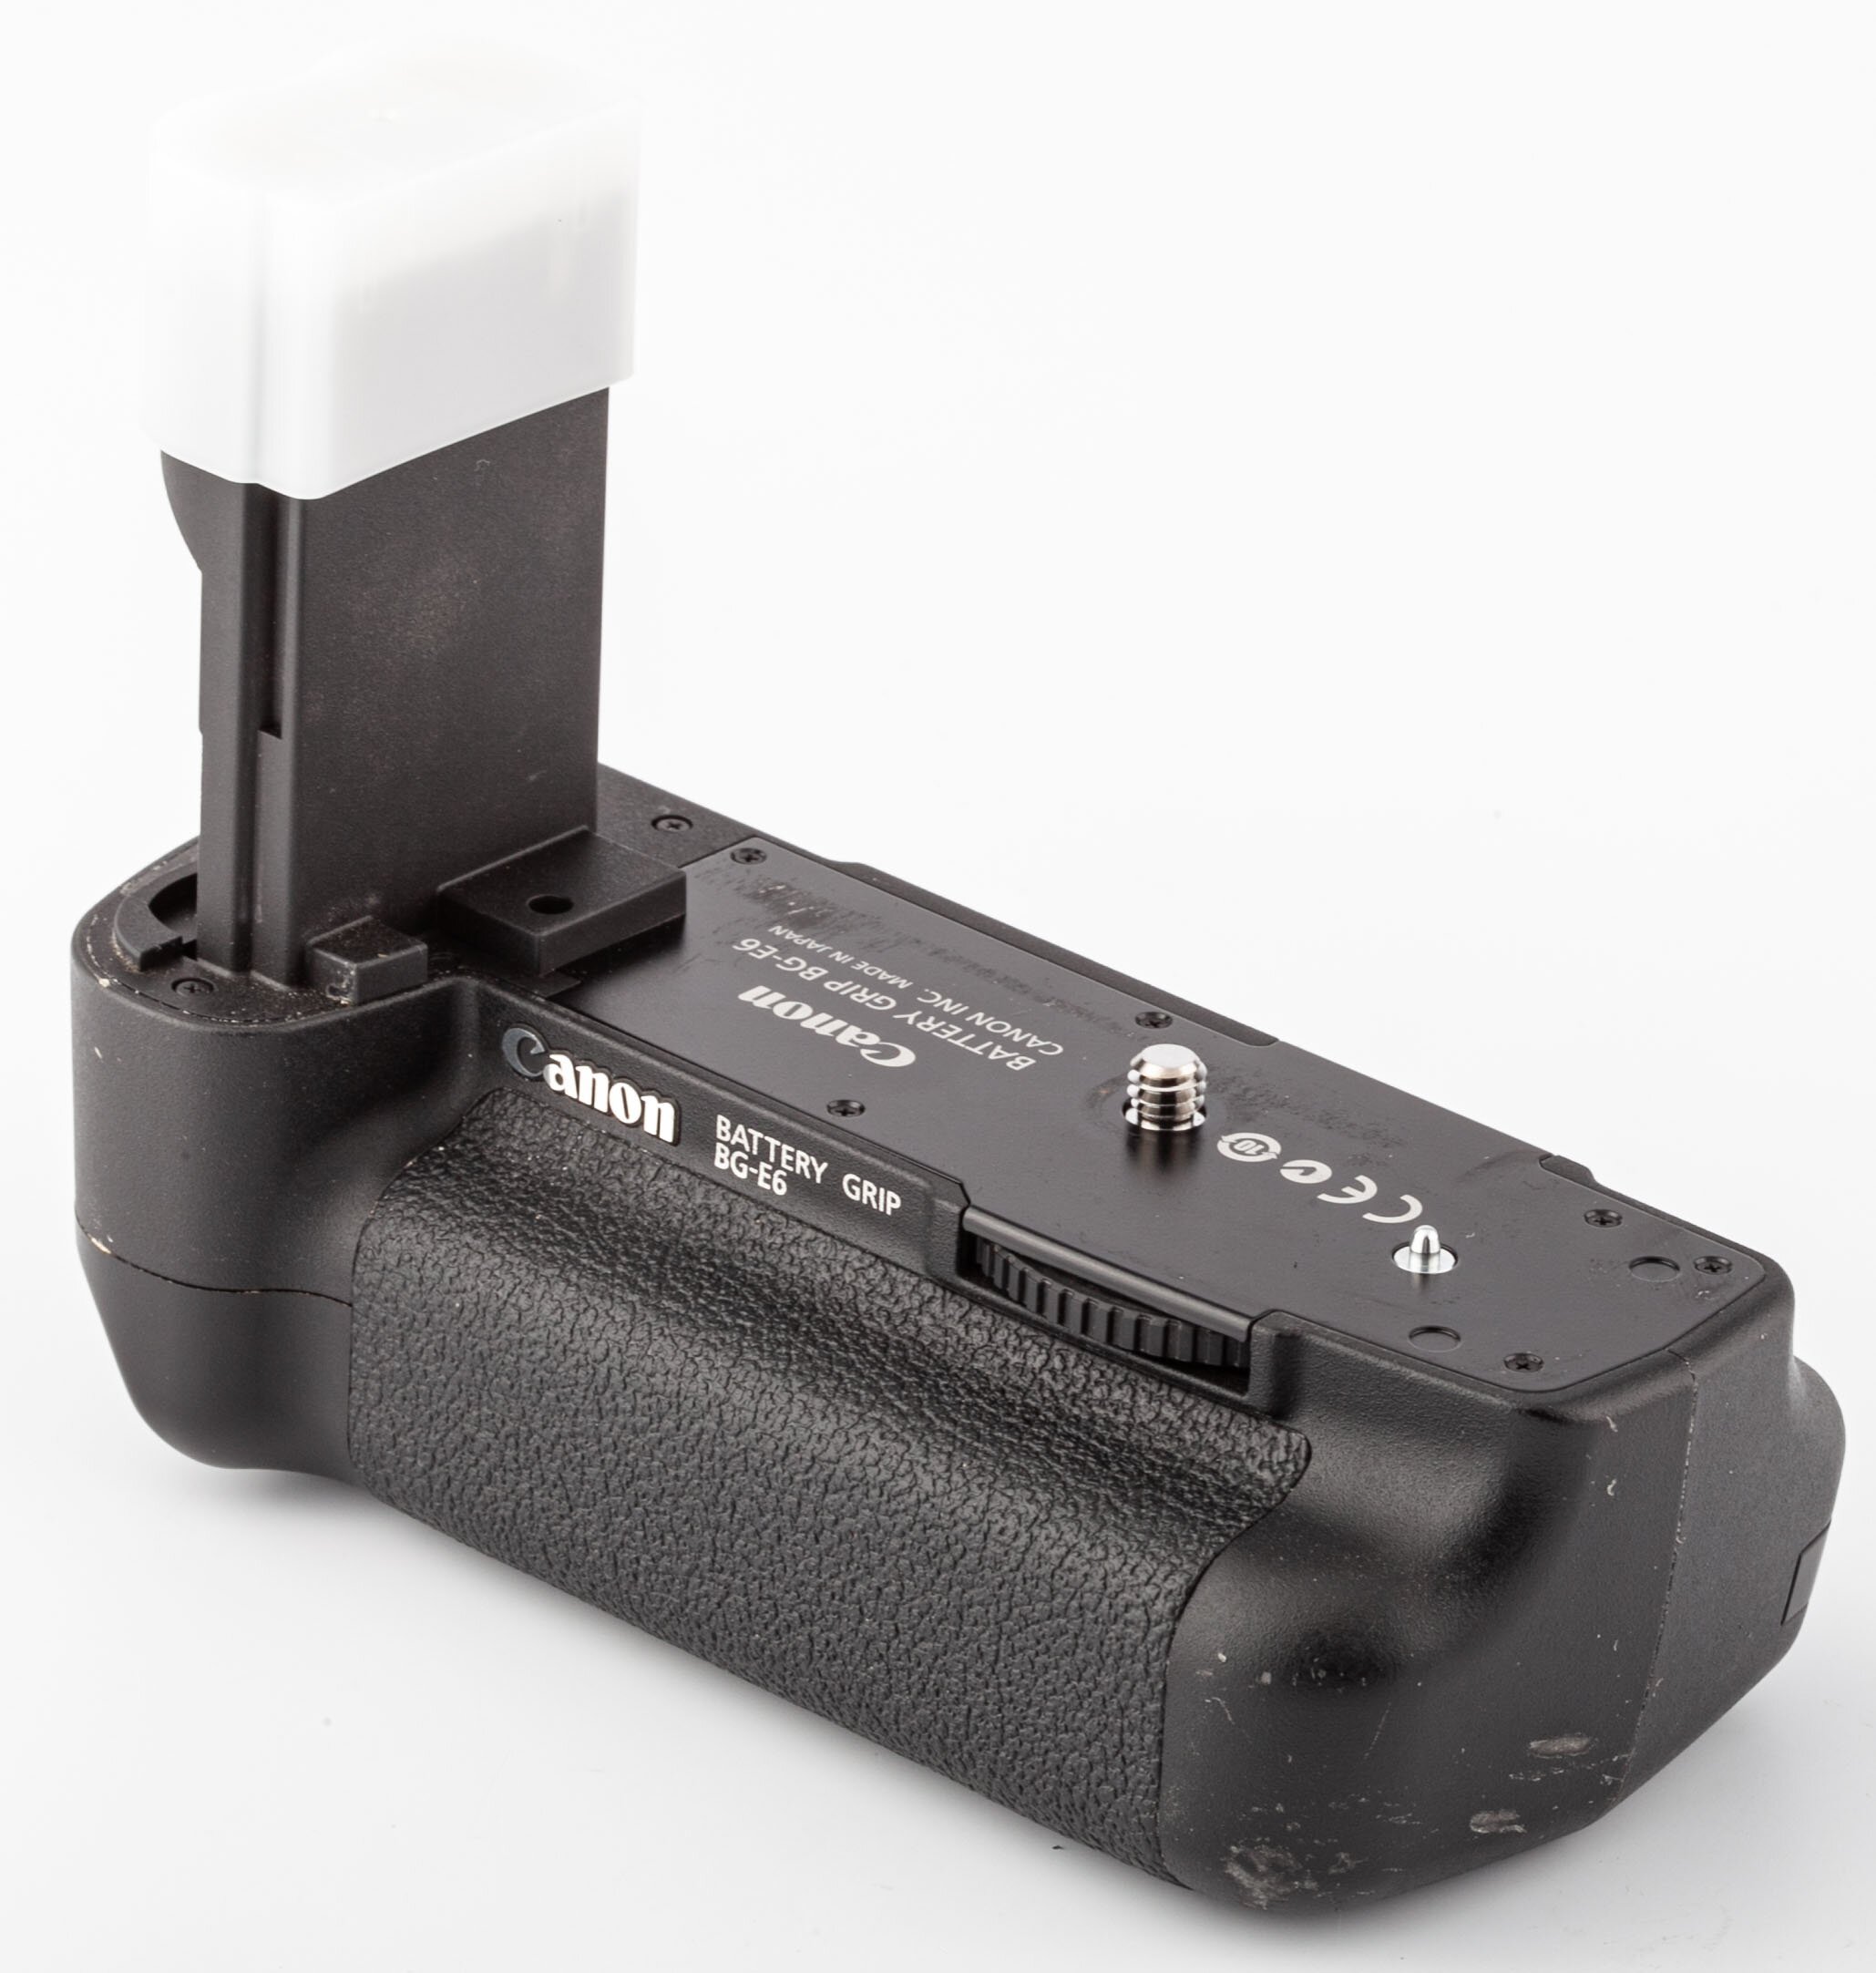 Canon Battery Grip BG E6 for EOS 5D MKII